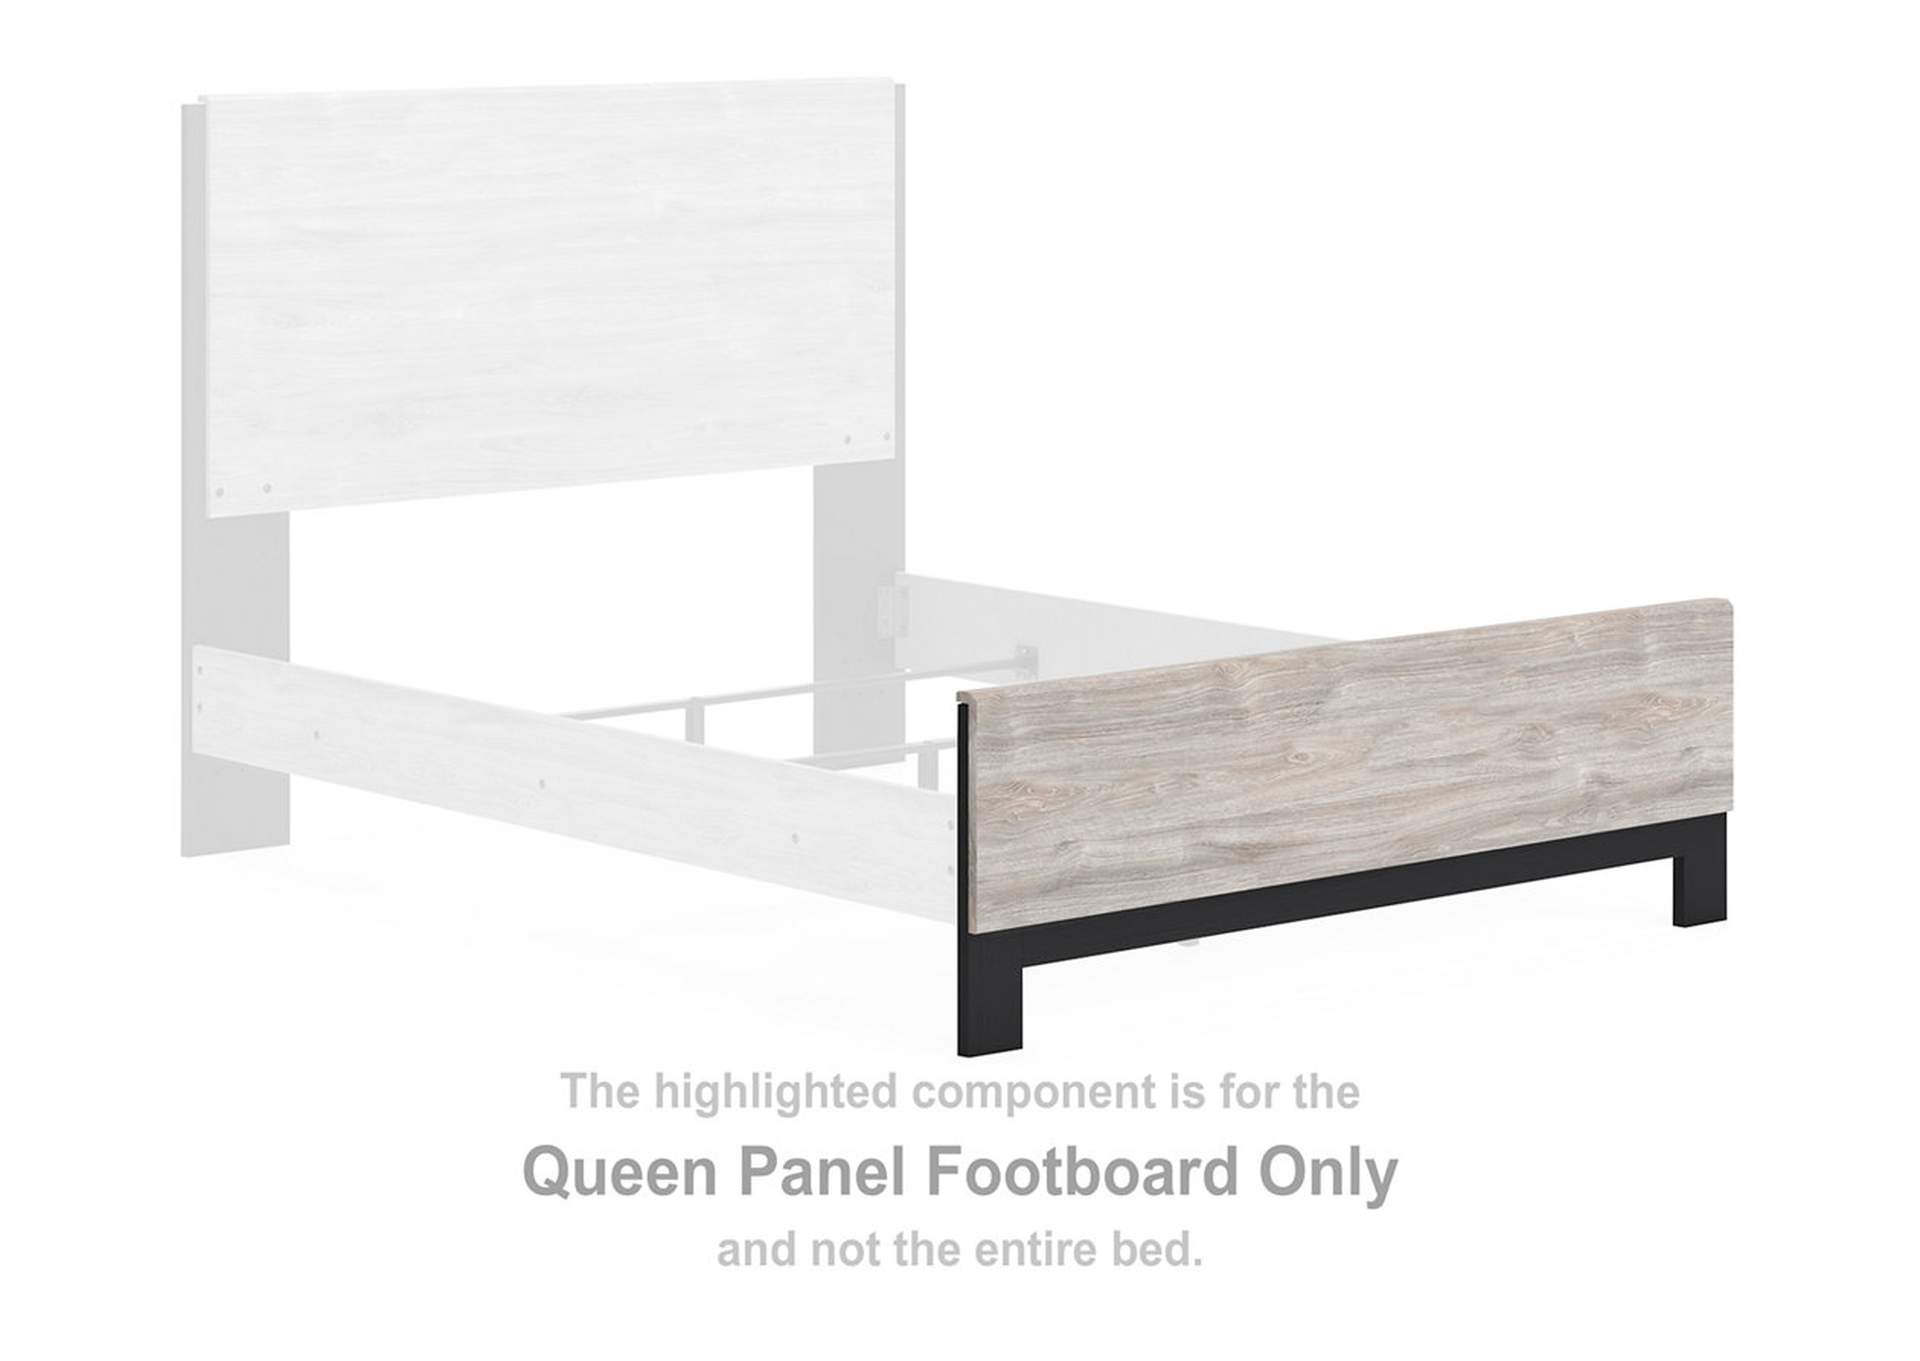 Vessalli Queen Panel Bed with Extensions,Benchcraft